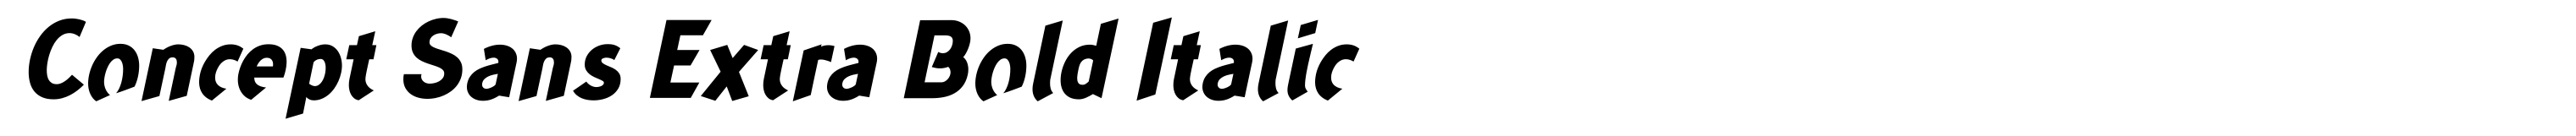 Concept Sans Extra Bold Italic